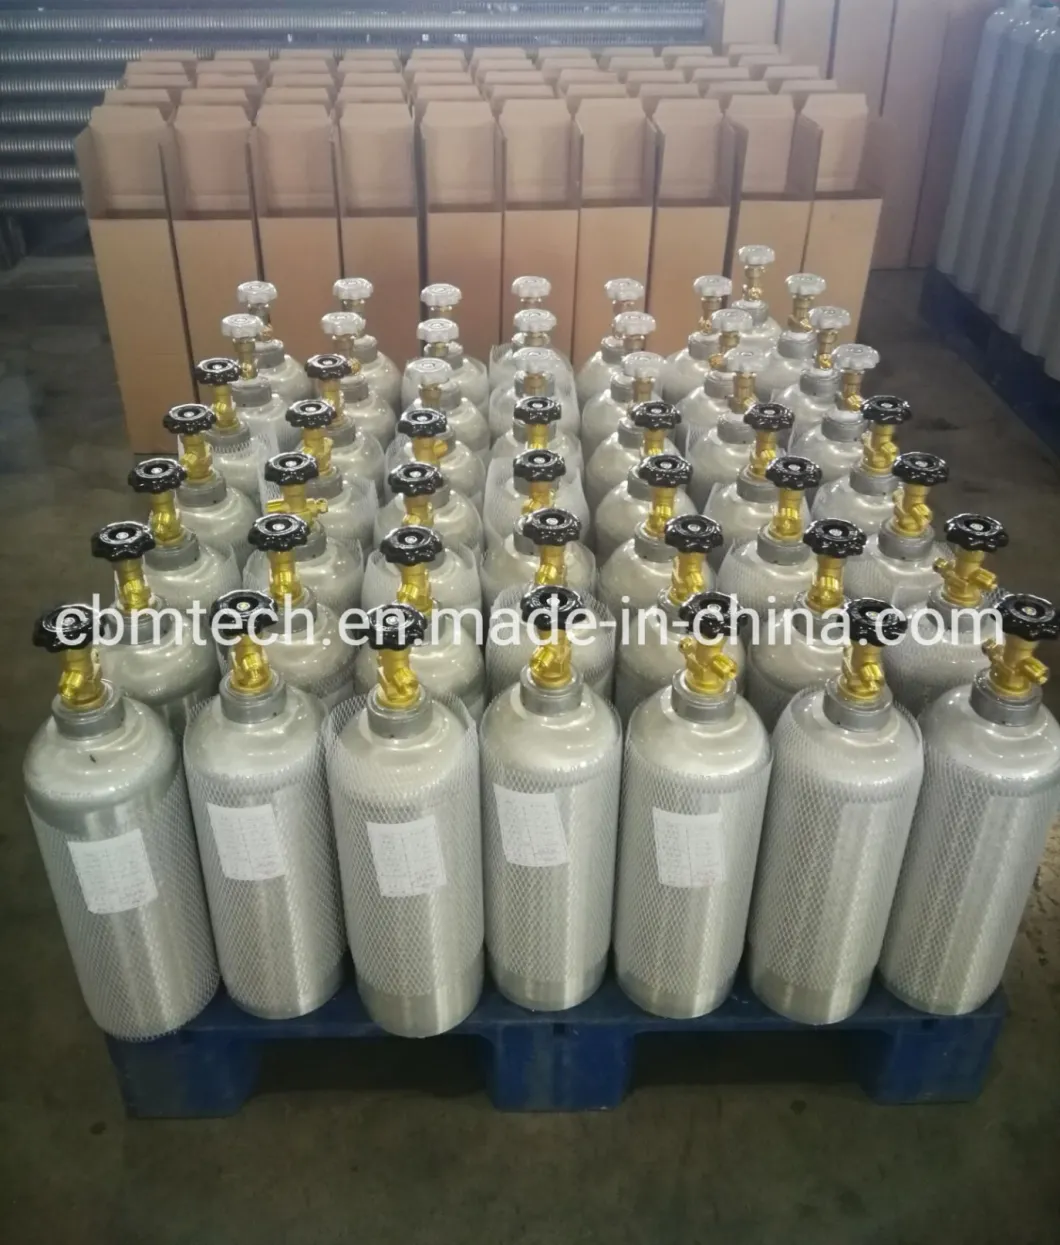 2L~30L Aluminum CO2 & Beverage Cylinders